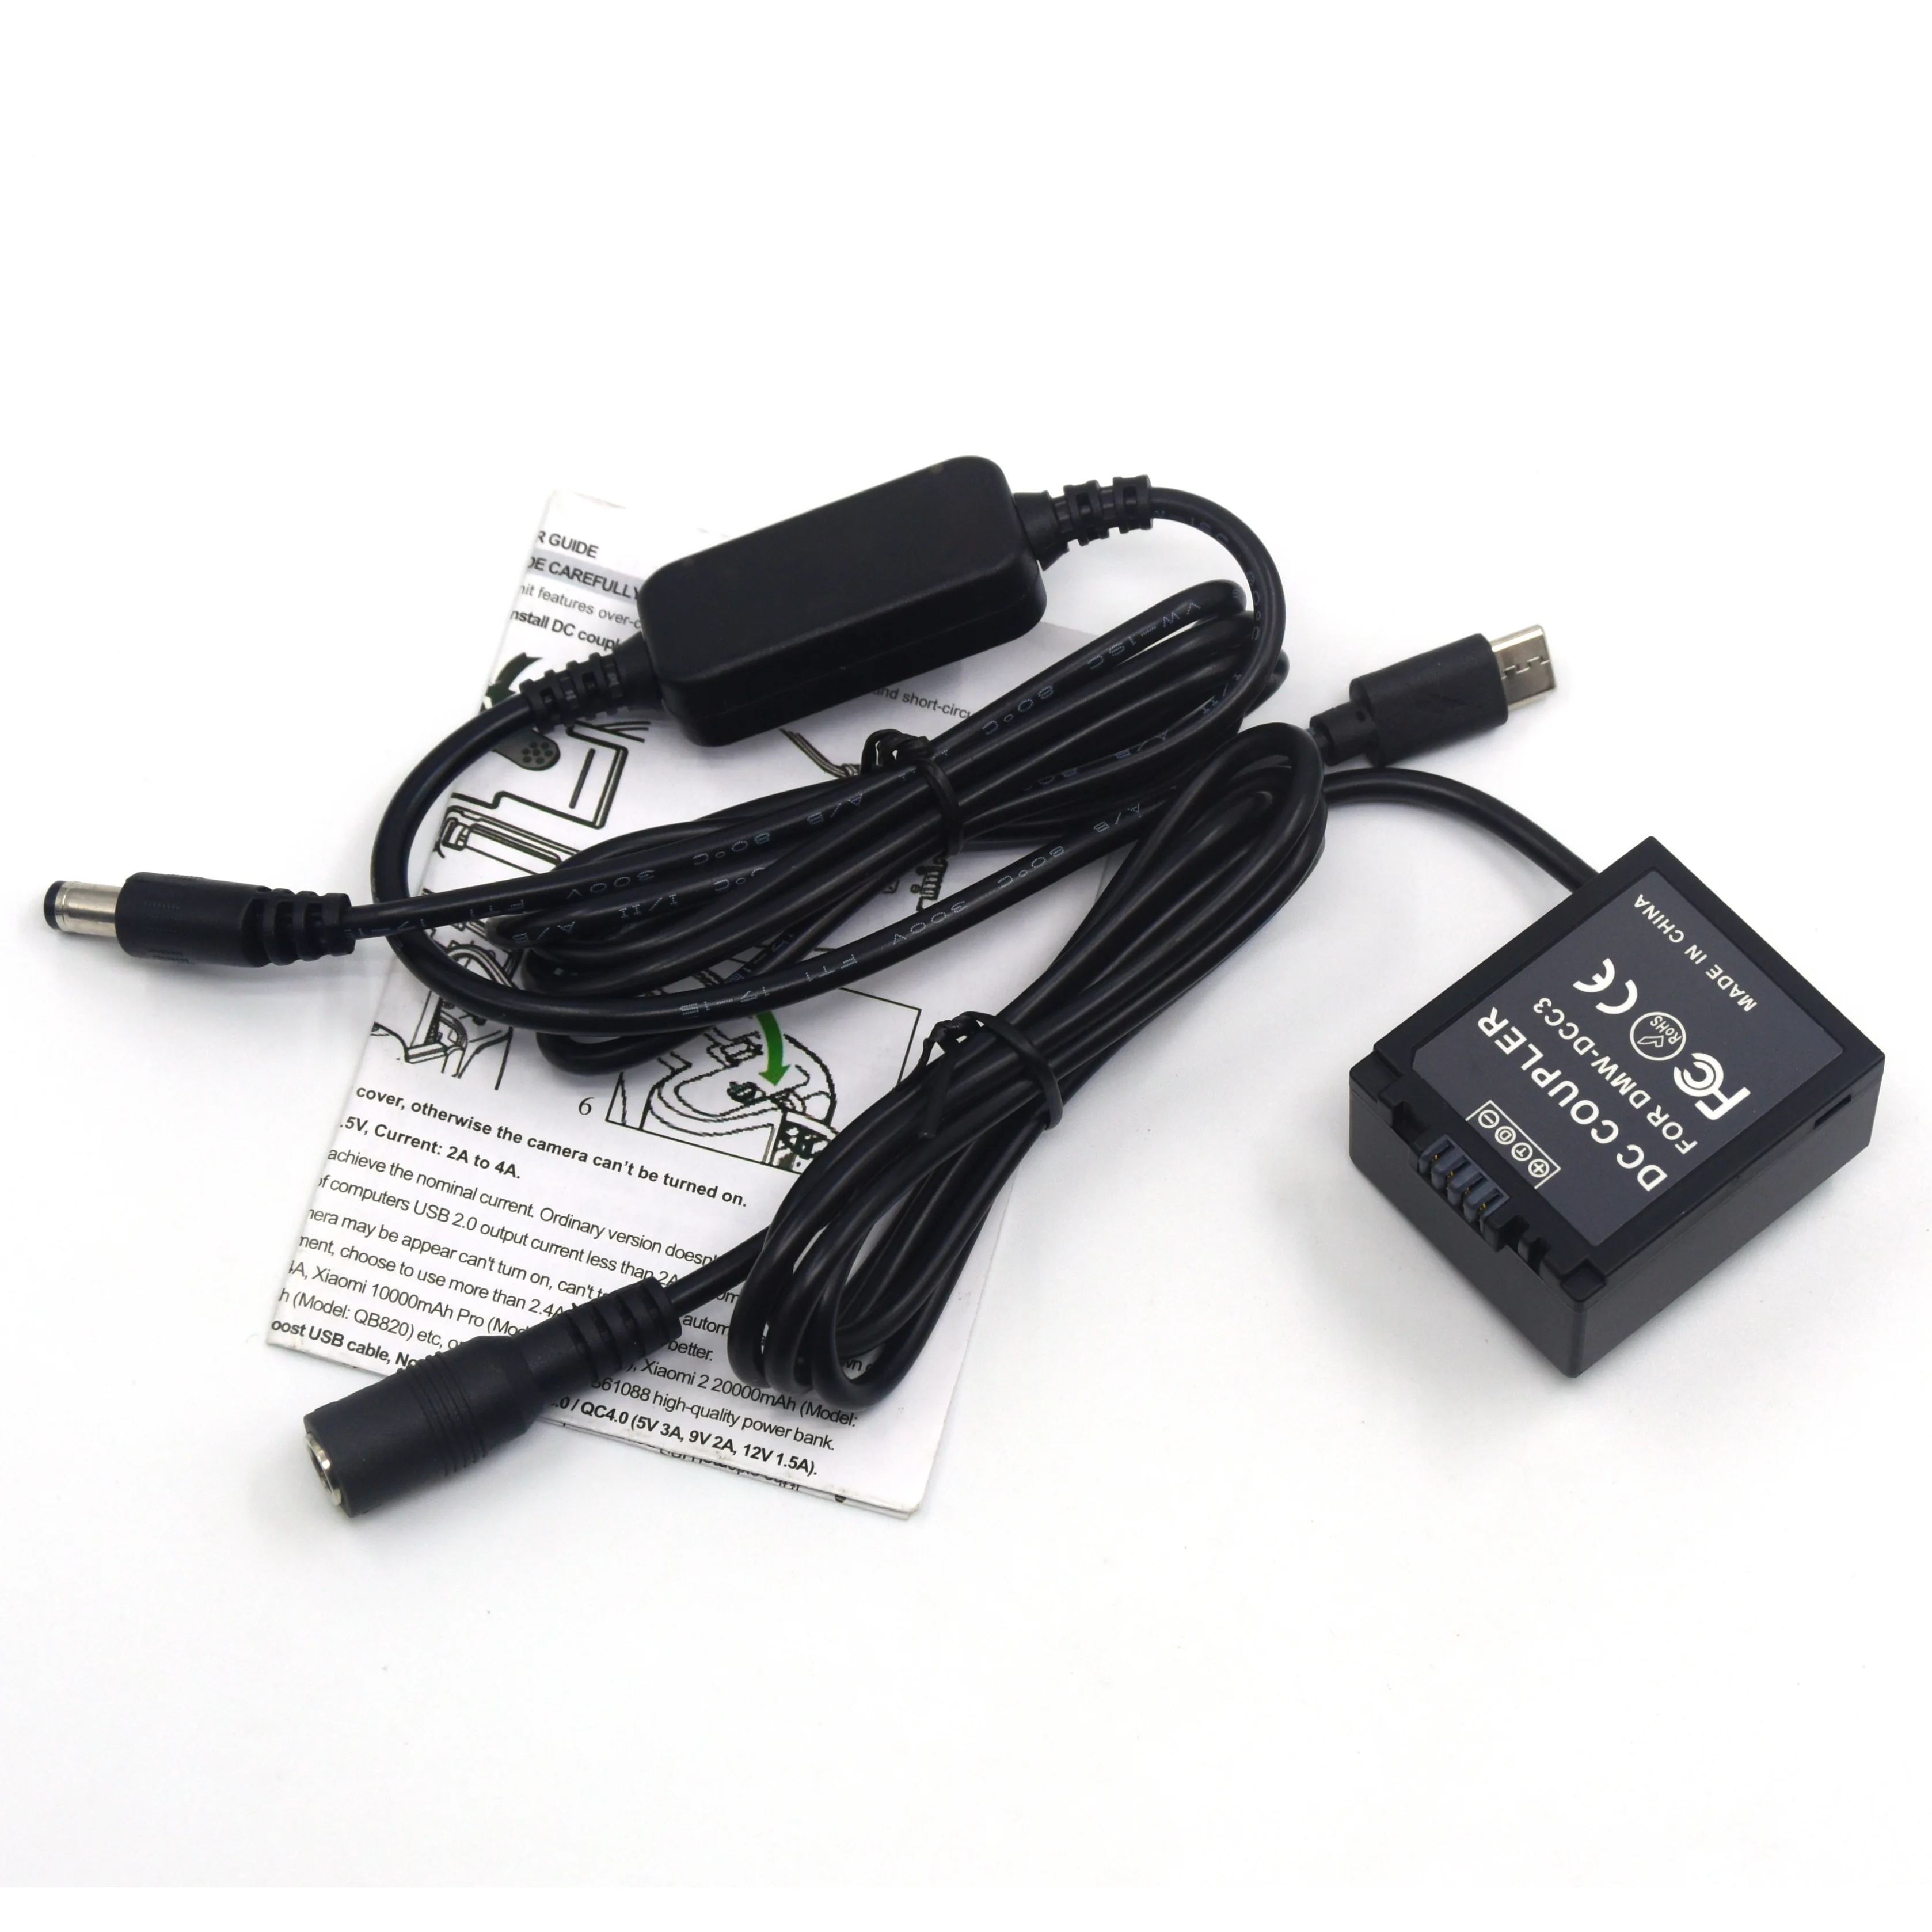 

USB Type C Power Adapter Cable + DMW-BLB13 Dummy Battery DMW-DCC3 DC Coupler for Panasonic Lumix DMC-G1 GH1 GF1 G2 G10 Camera